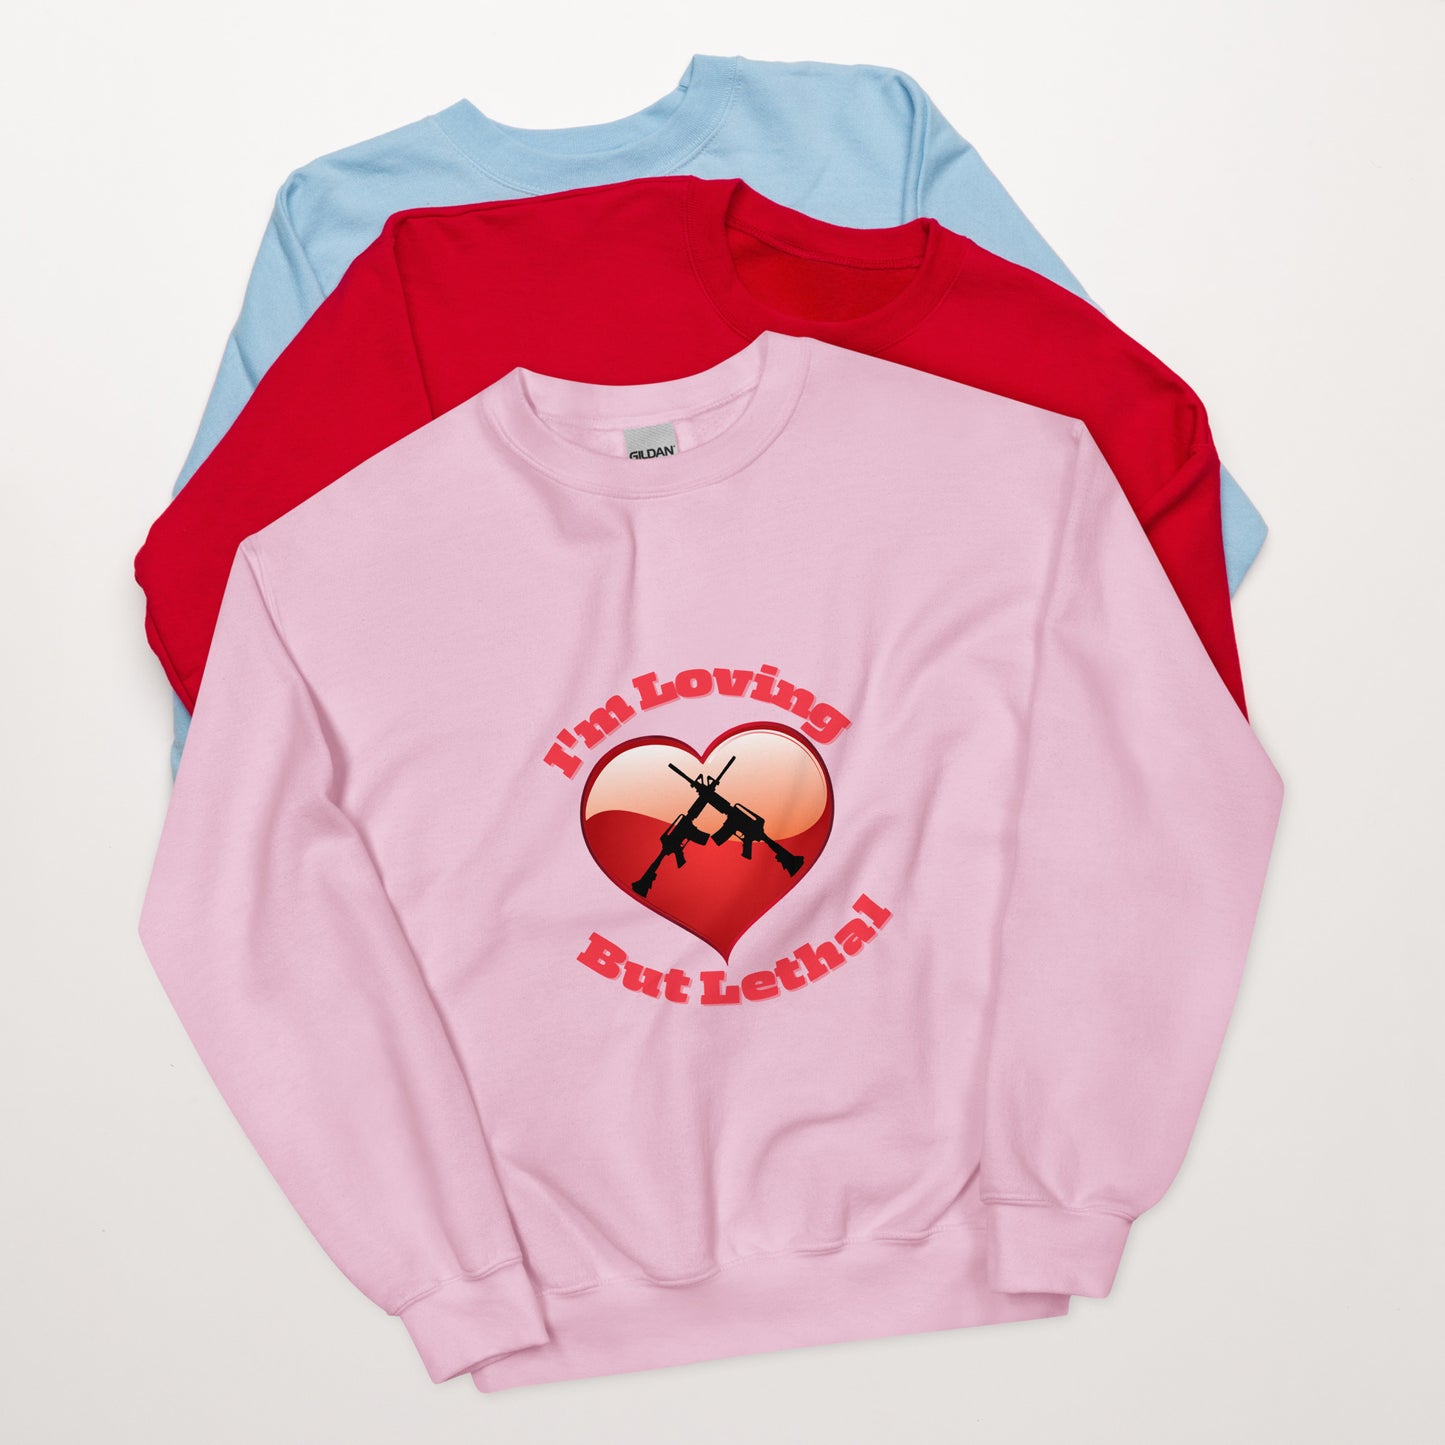 Loving But Lethal - Unisex Sweatshirt